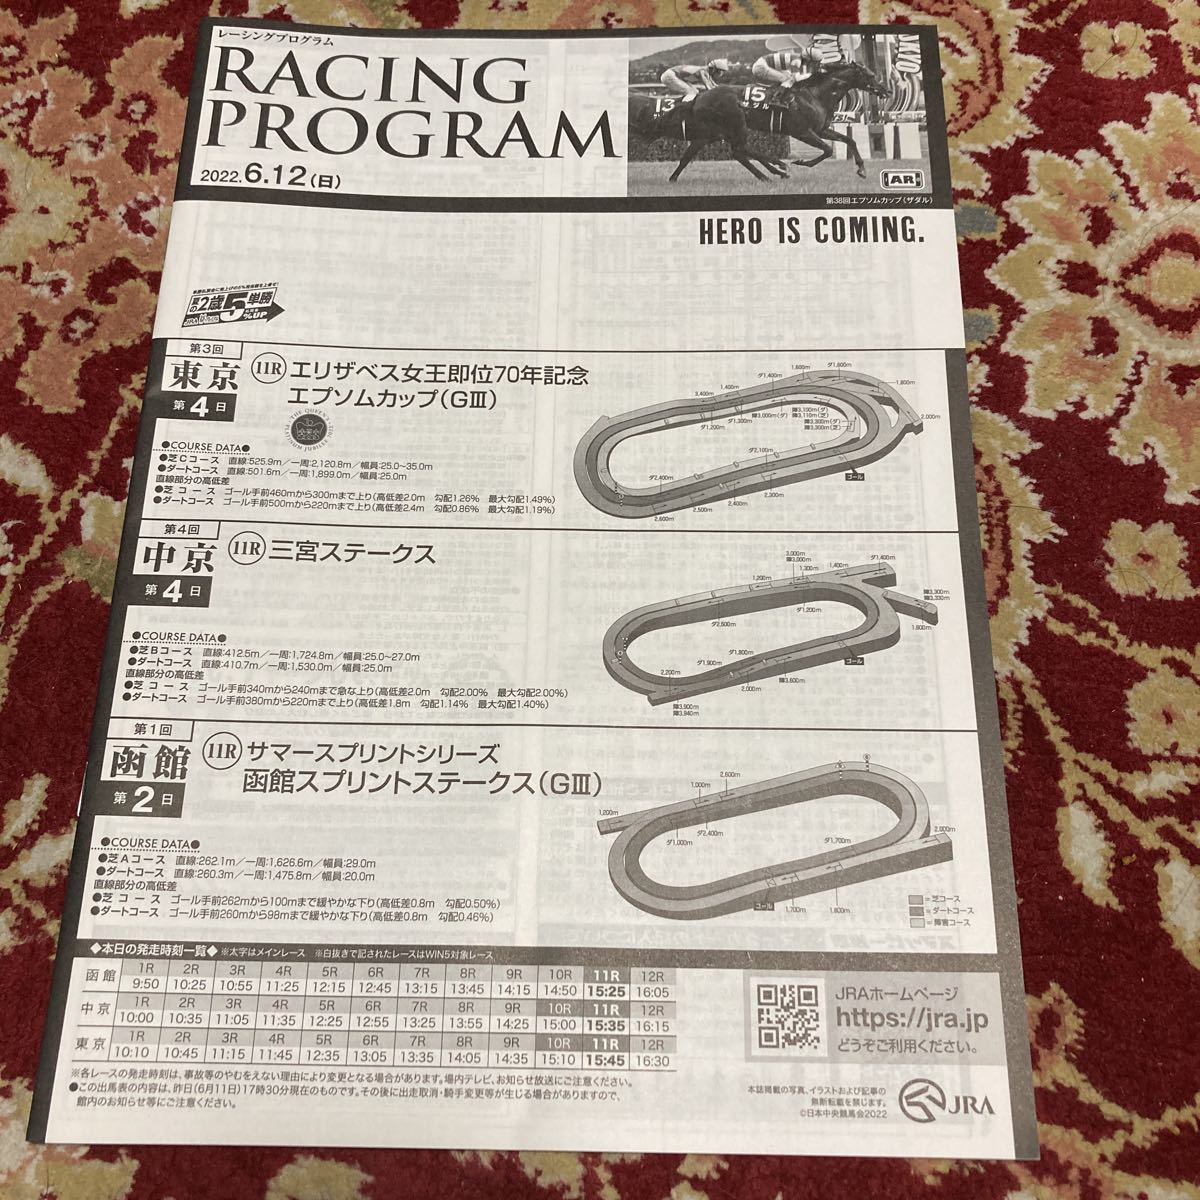 JRA Racing Program 2022.6.12( day )epsom cup (GⅢ), Hakodate Sprint stay ks(GⅢ), three . stay ks